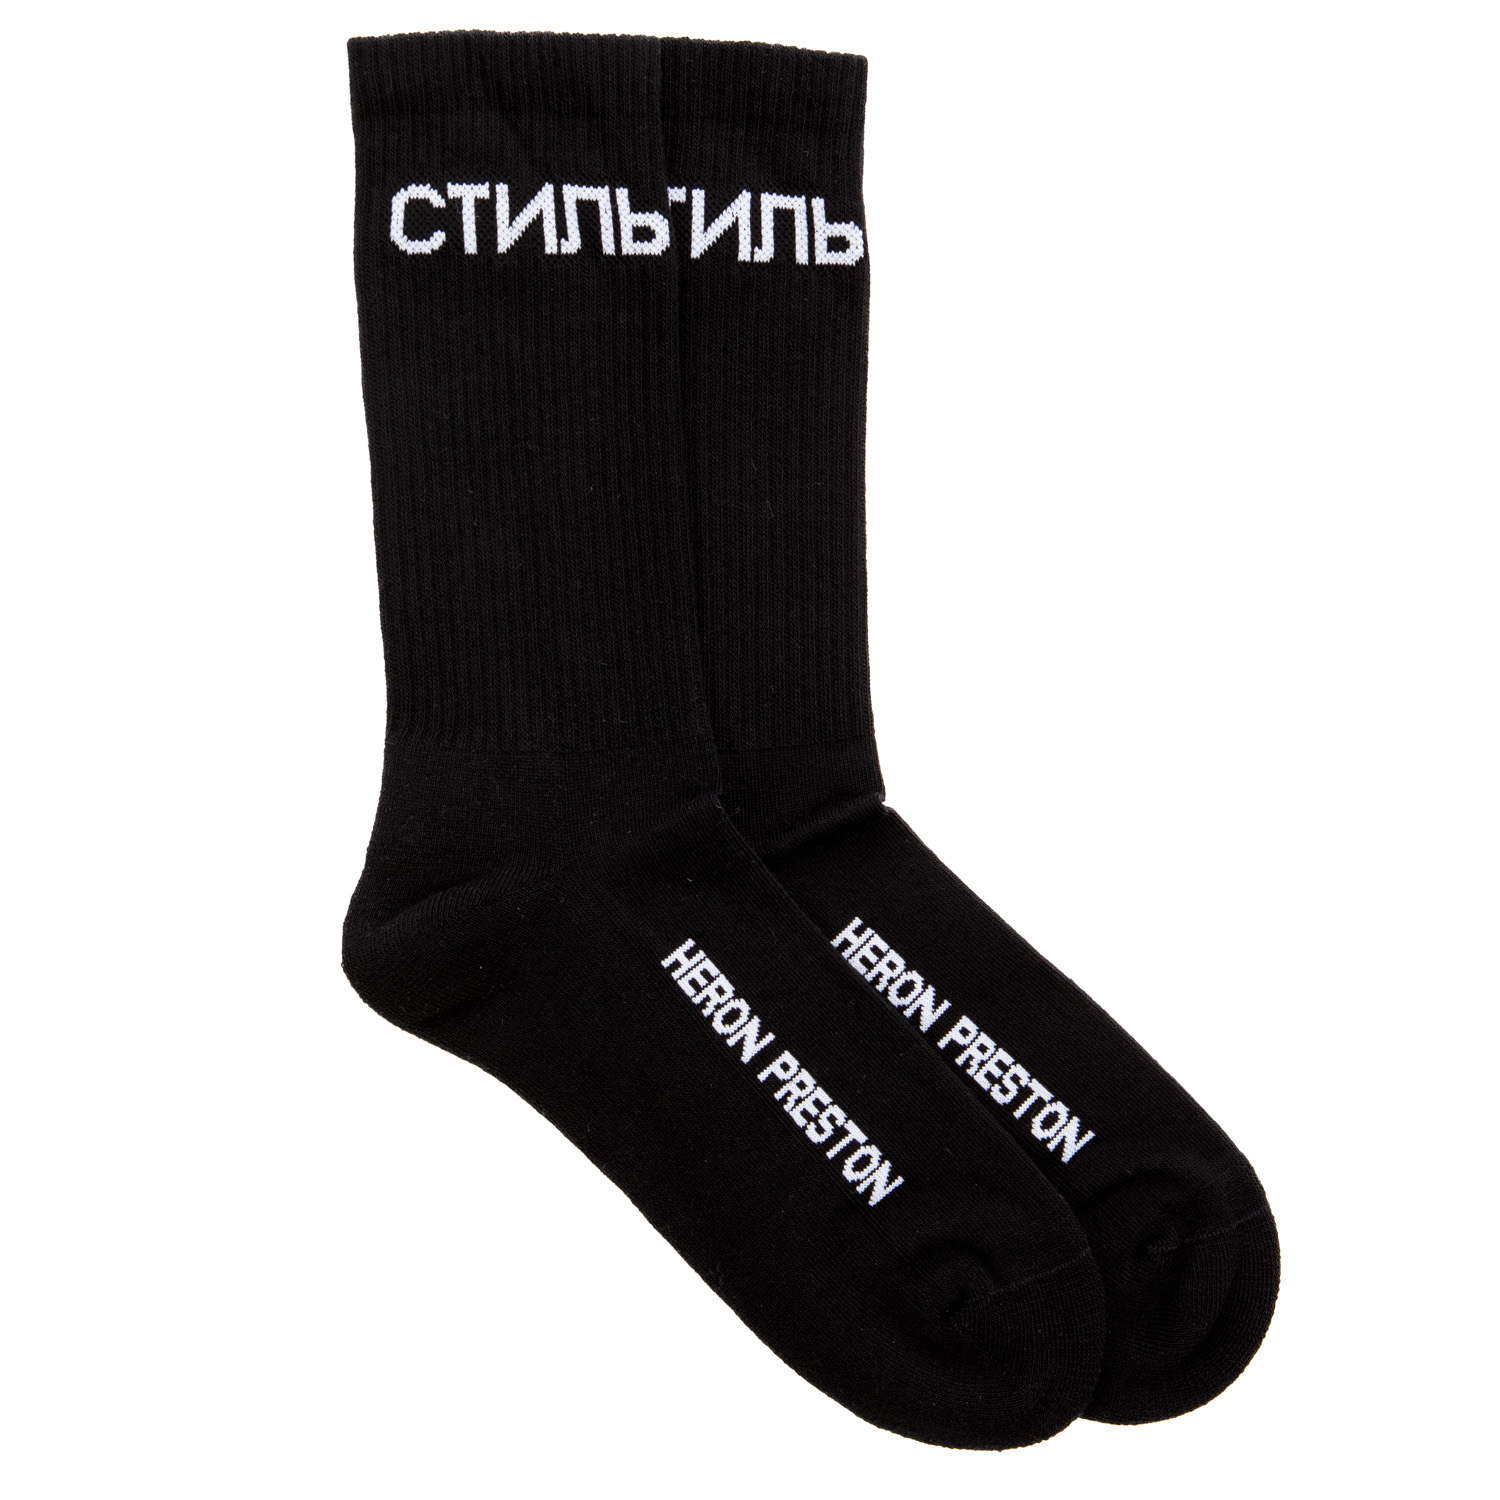 Heron Preston Ctnmb Long Socks | Credomen